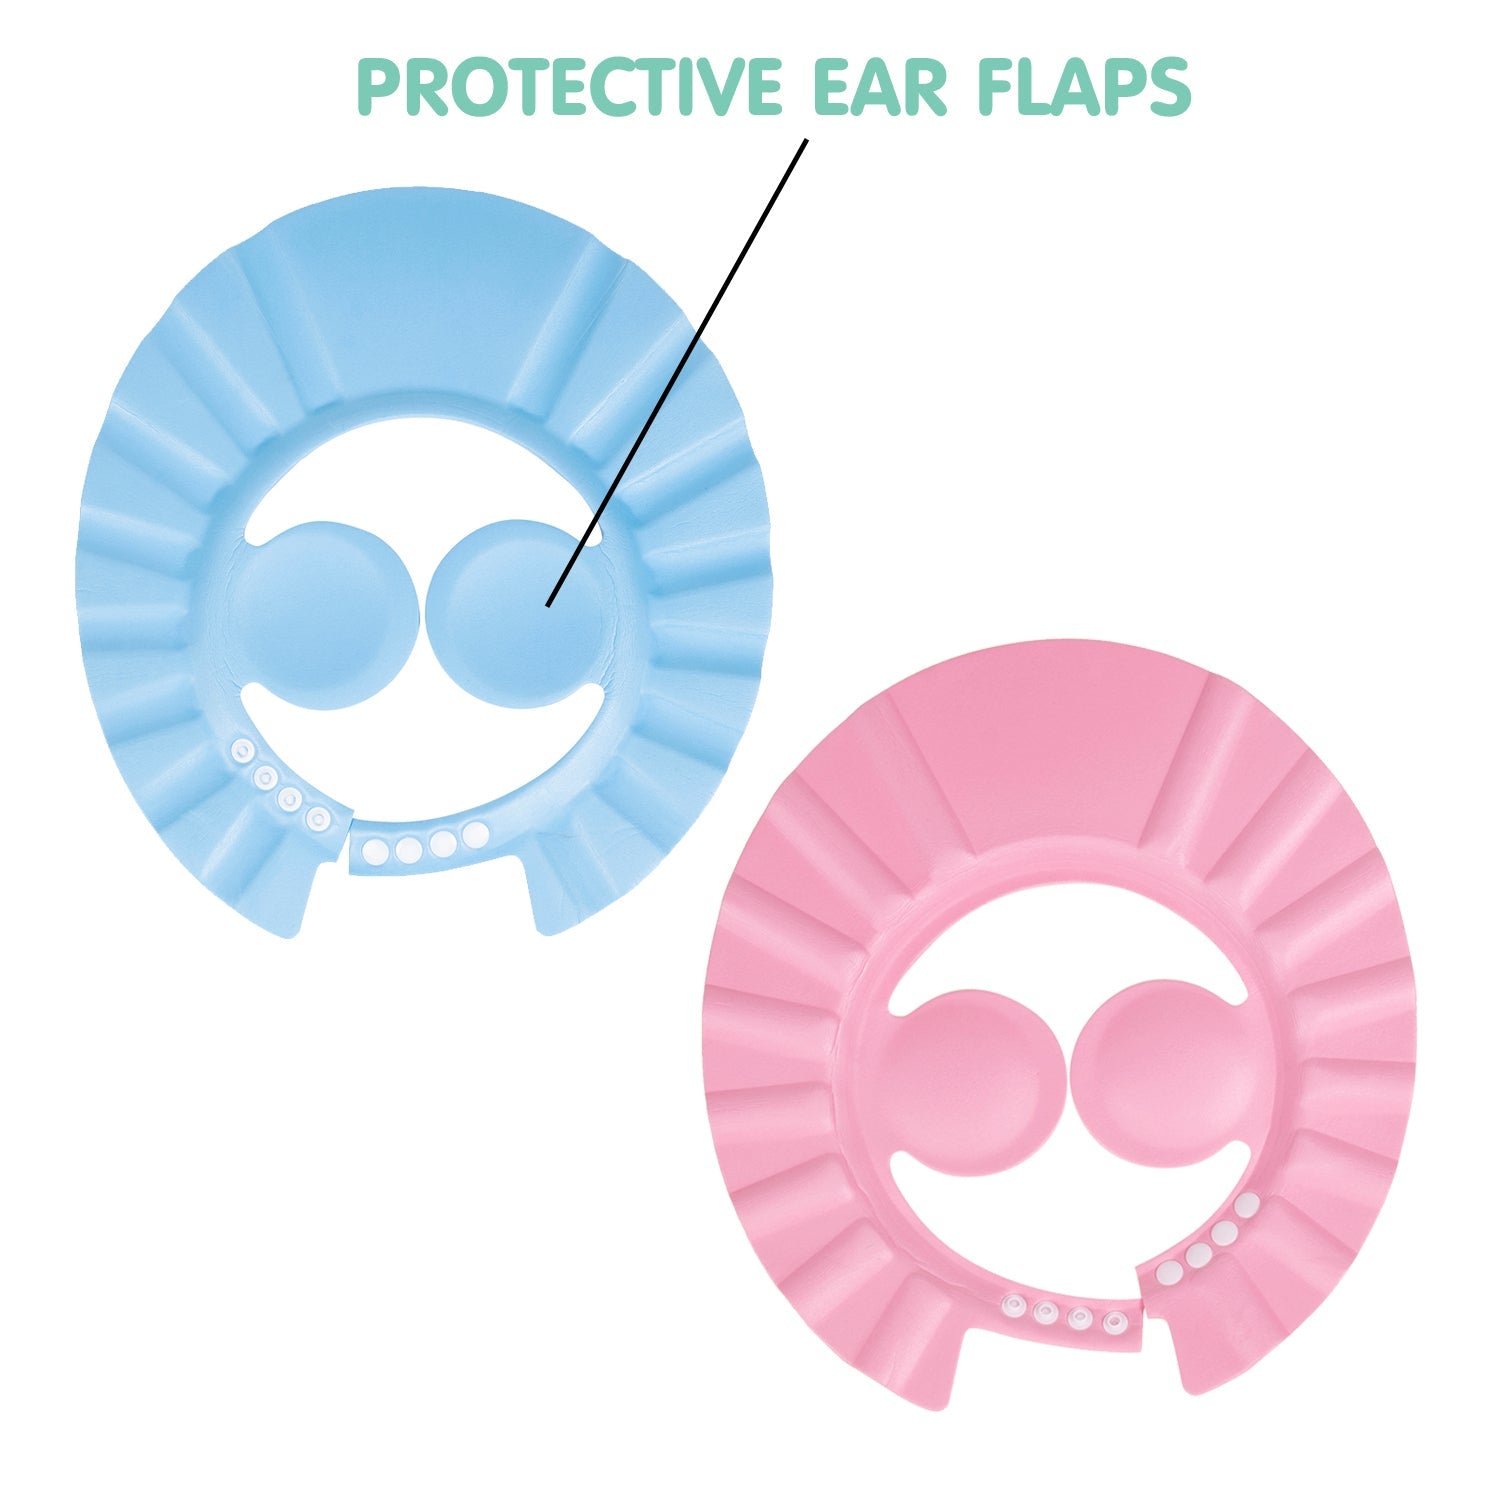 Baby Moo No Tears Safe Adjustable Bathing Shower Cap Pack of 2 - Pink, Blue